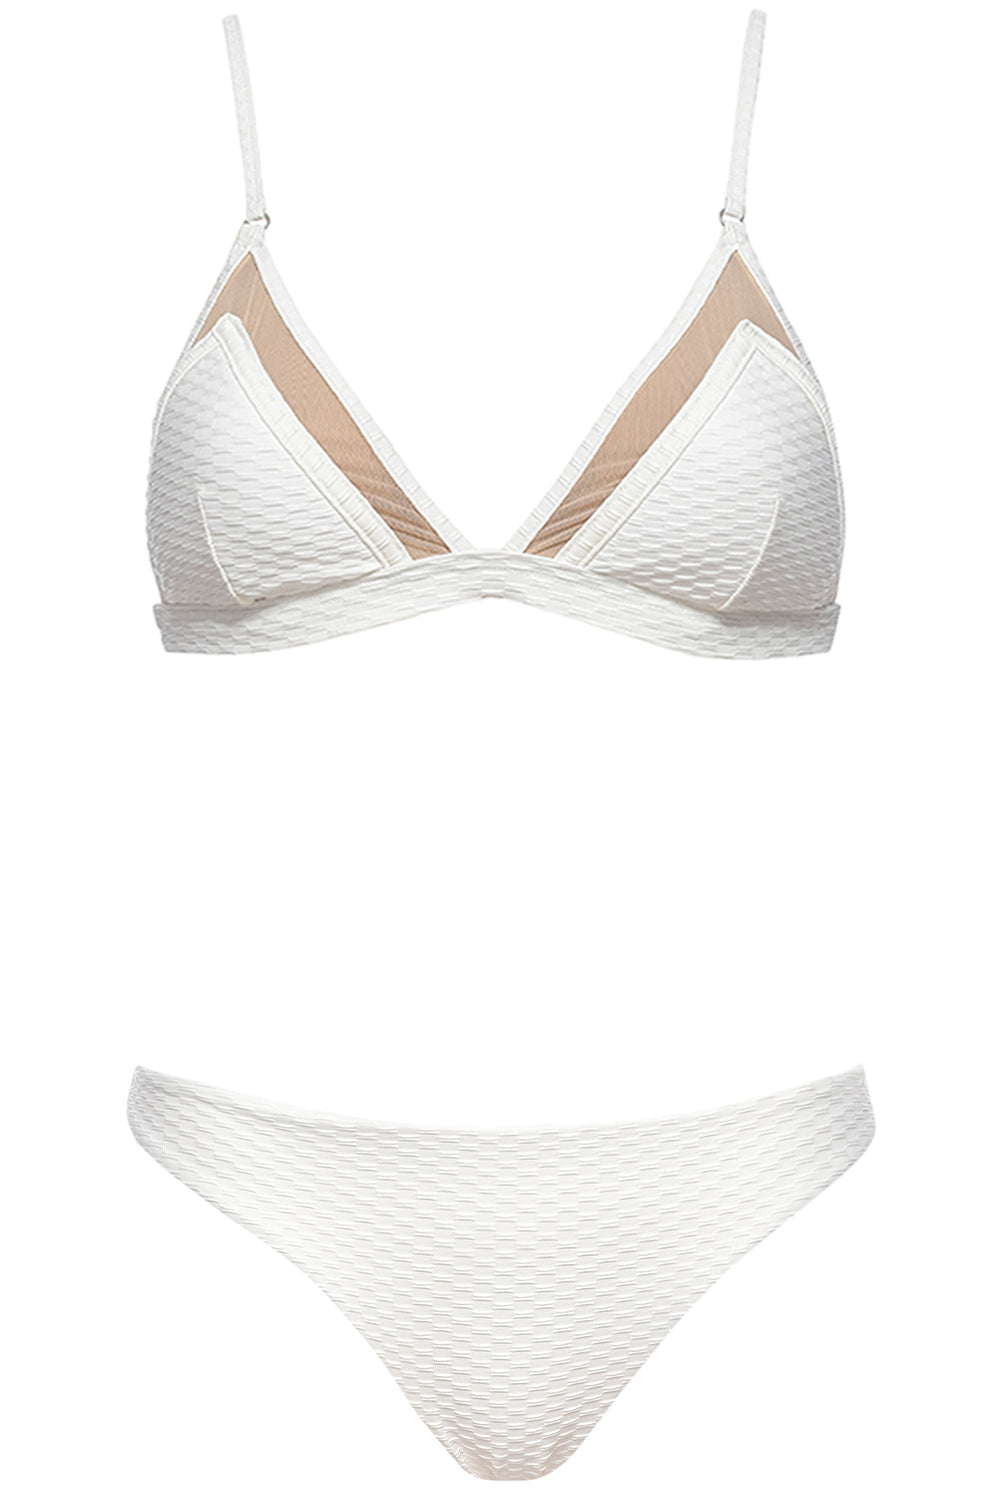 Triangle Bikini Ivory Set on white background front view.